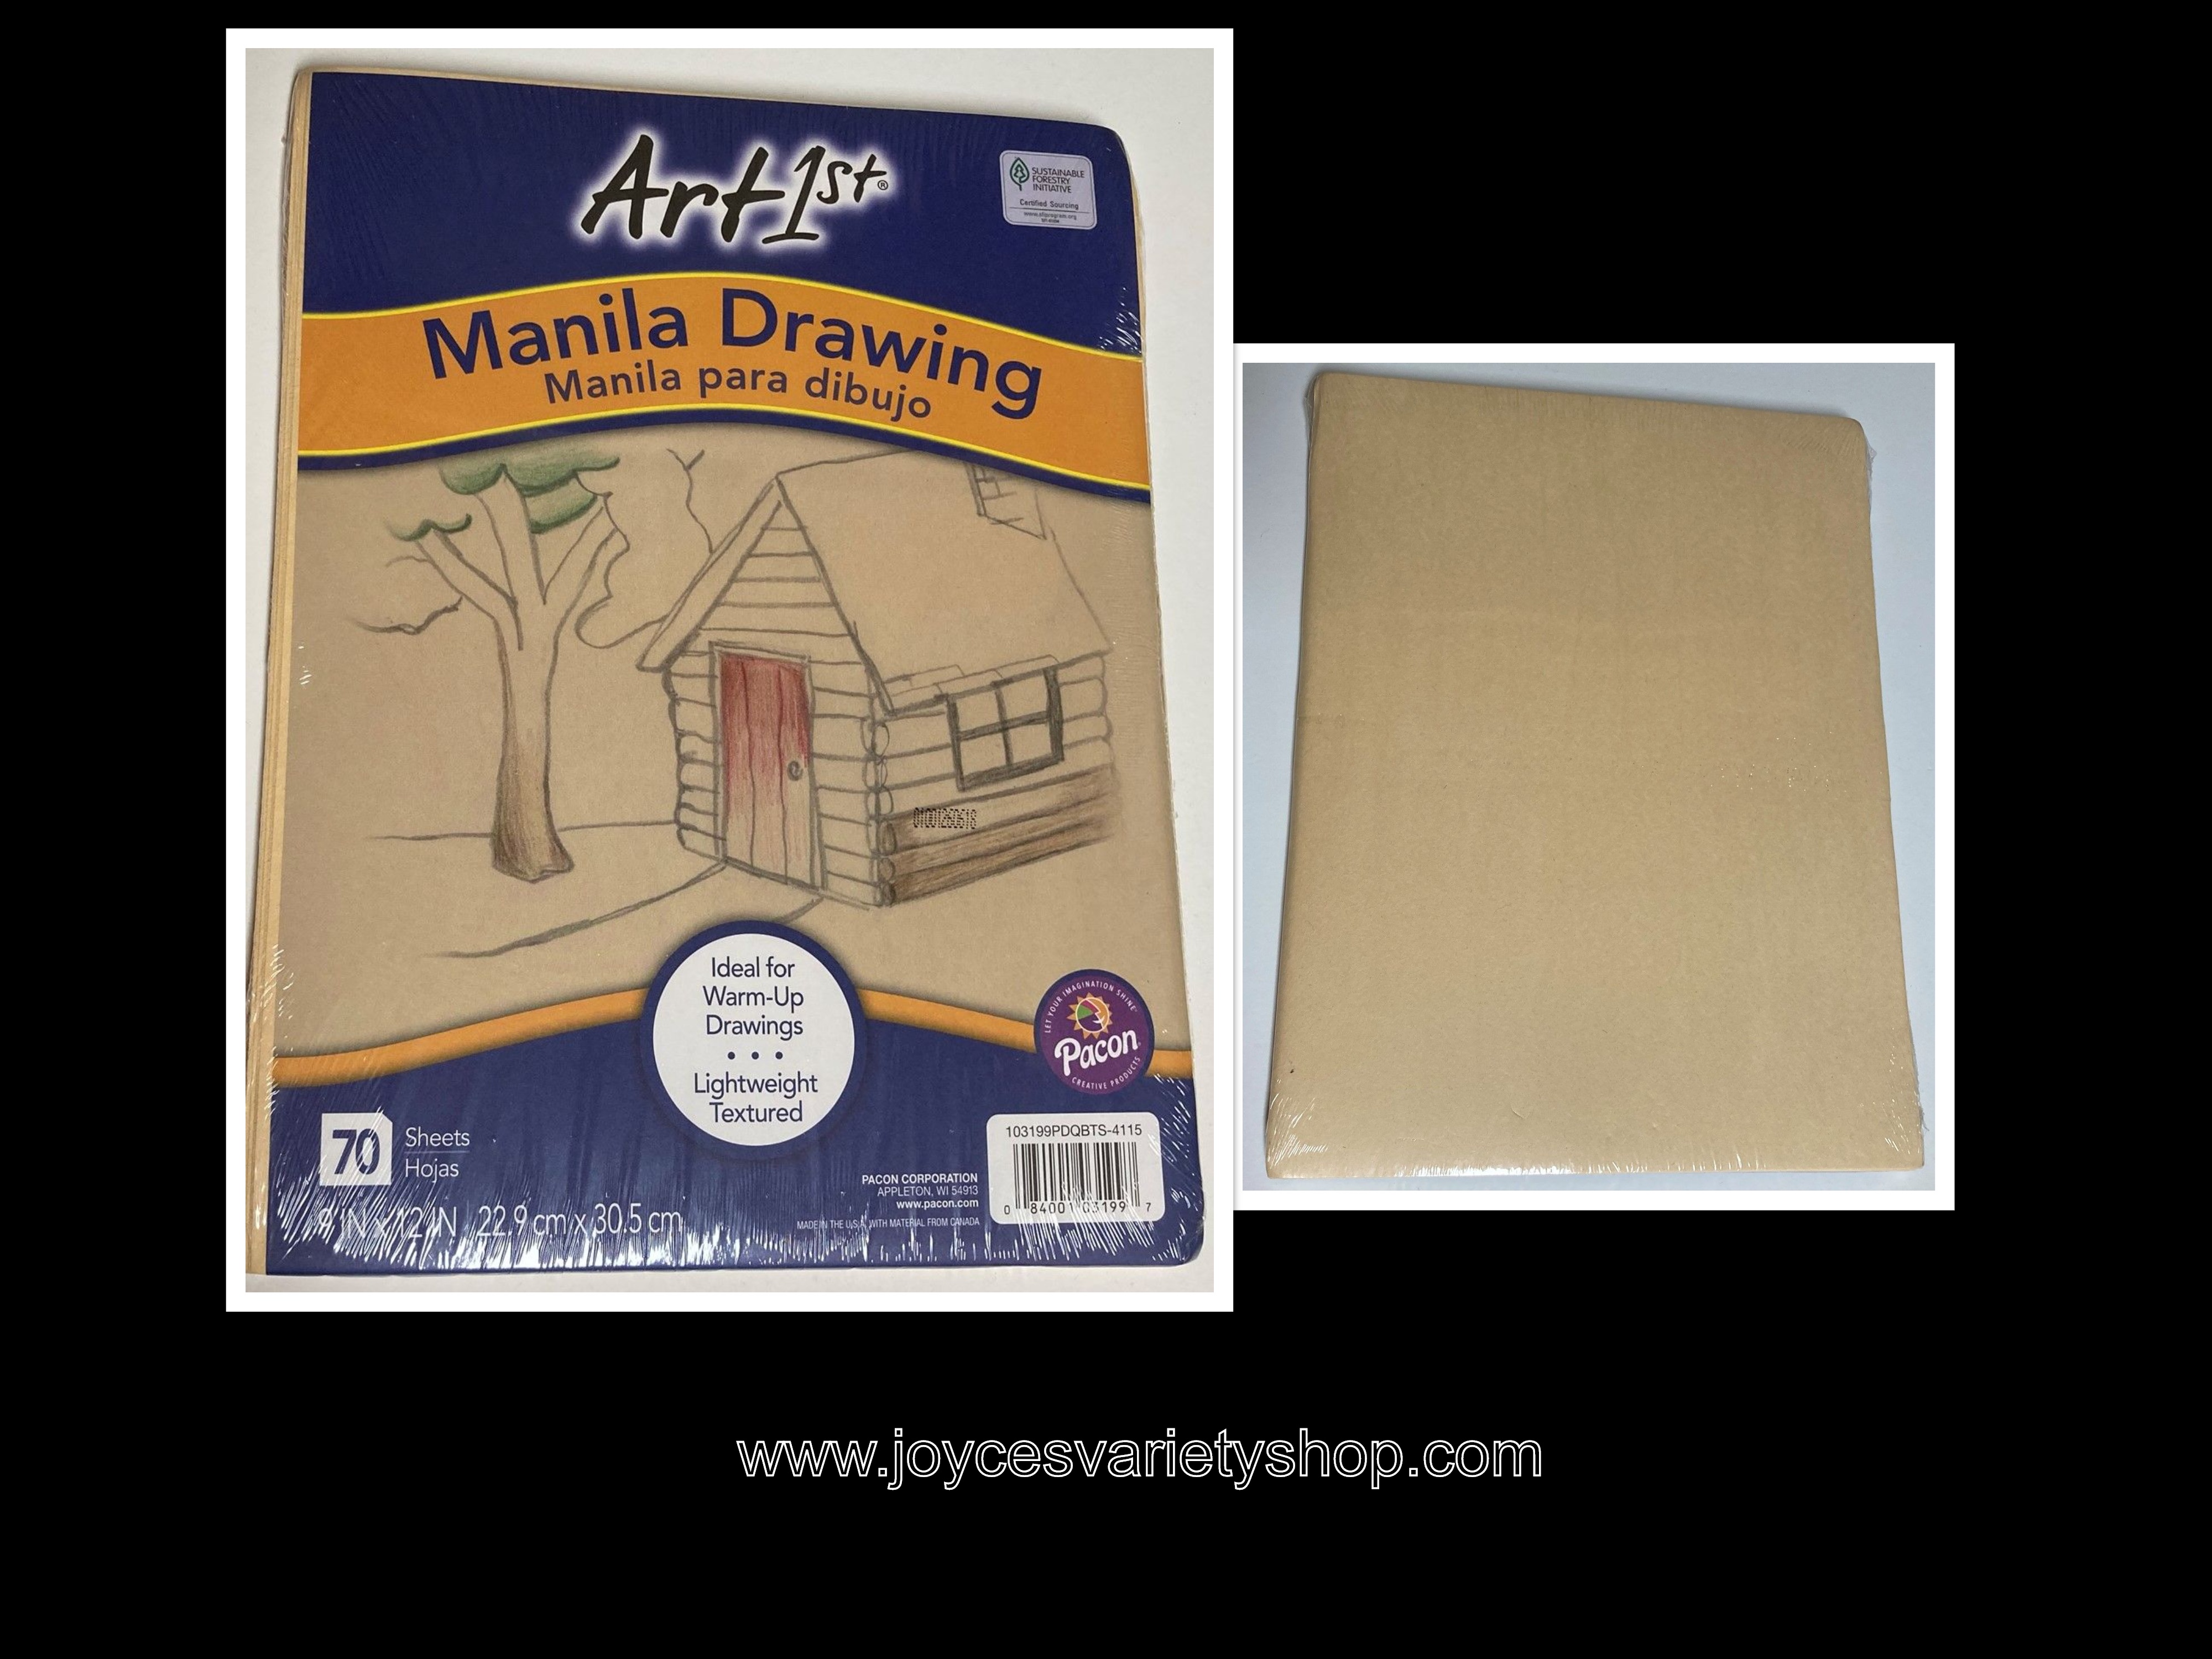 Art 1st Manila Drawing Sketch Paper 70 Sheets 9" x 12" Lightweight Pacon